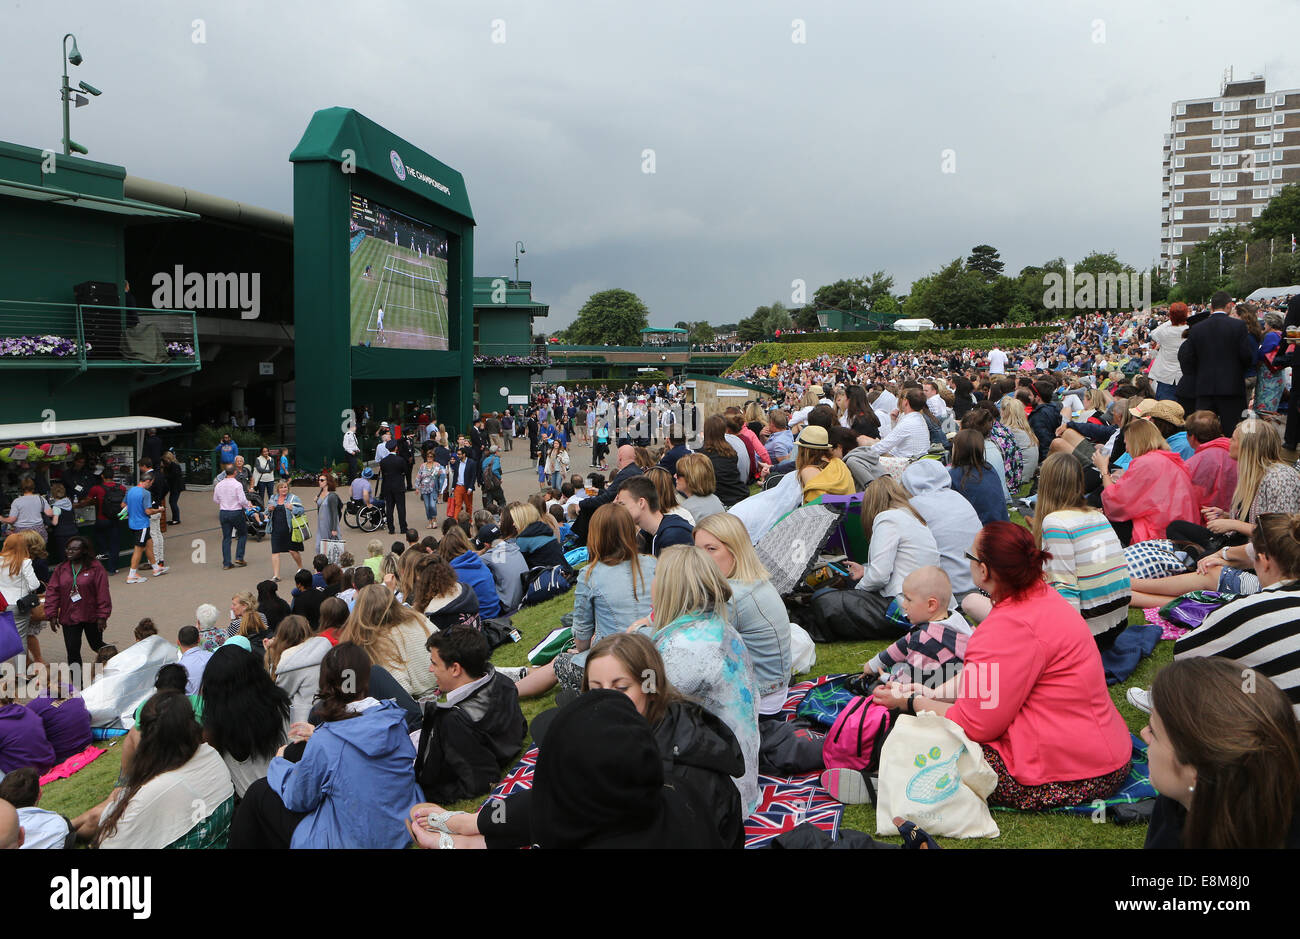 Zuschauer auf Mount Murray bei den Wimbledon Championships 2014, Stockfoto